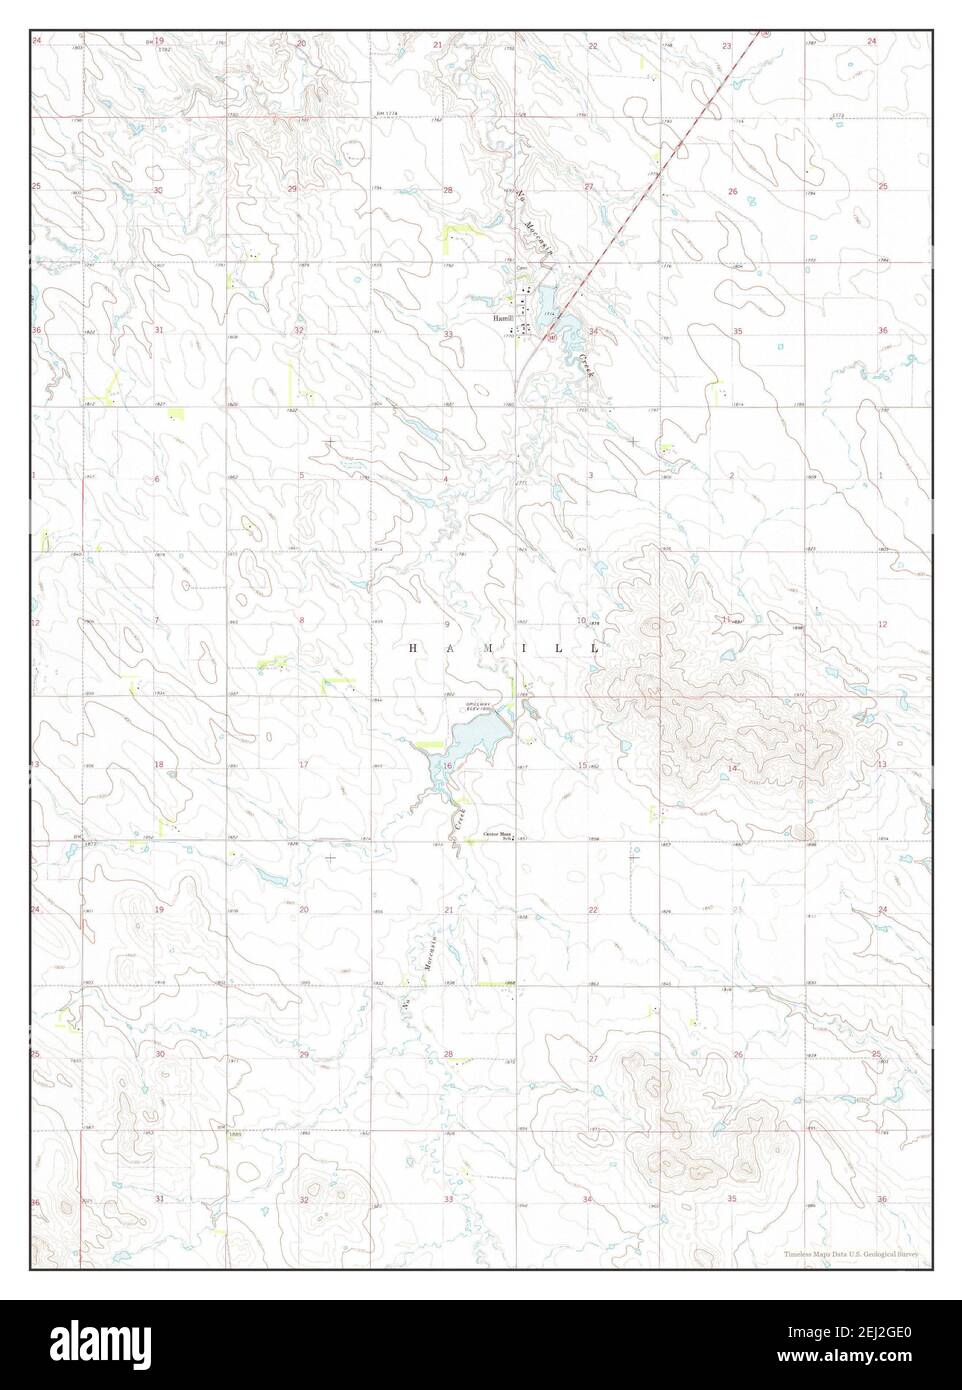 Hamill, South Dakota, map 1971, 1:24000, United States of America by Timeless Maps, data U.S. Geological Survey Stock Photo